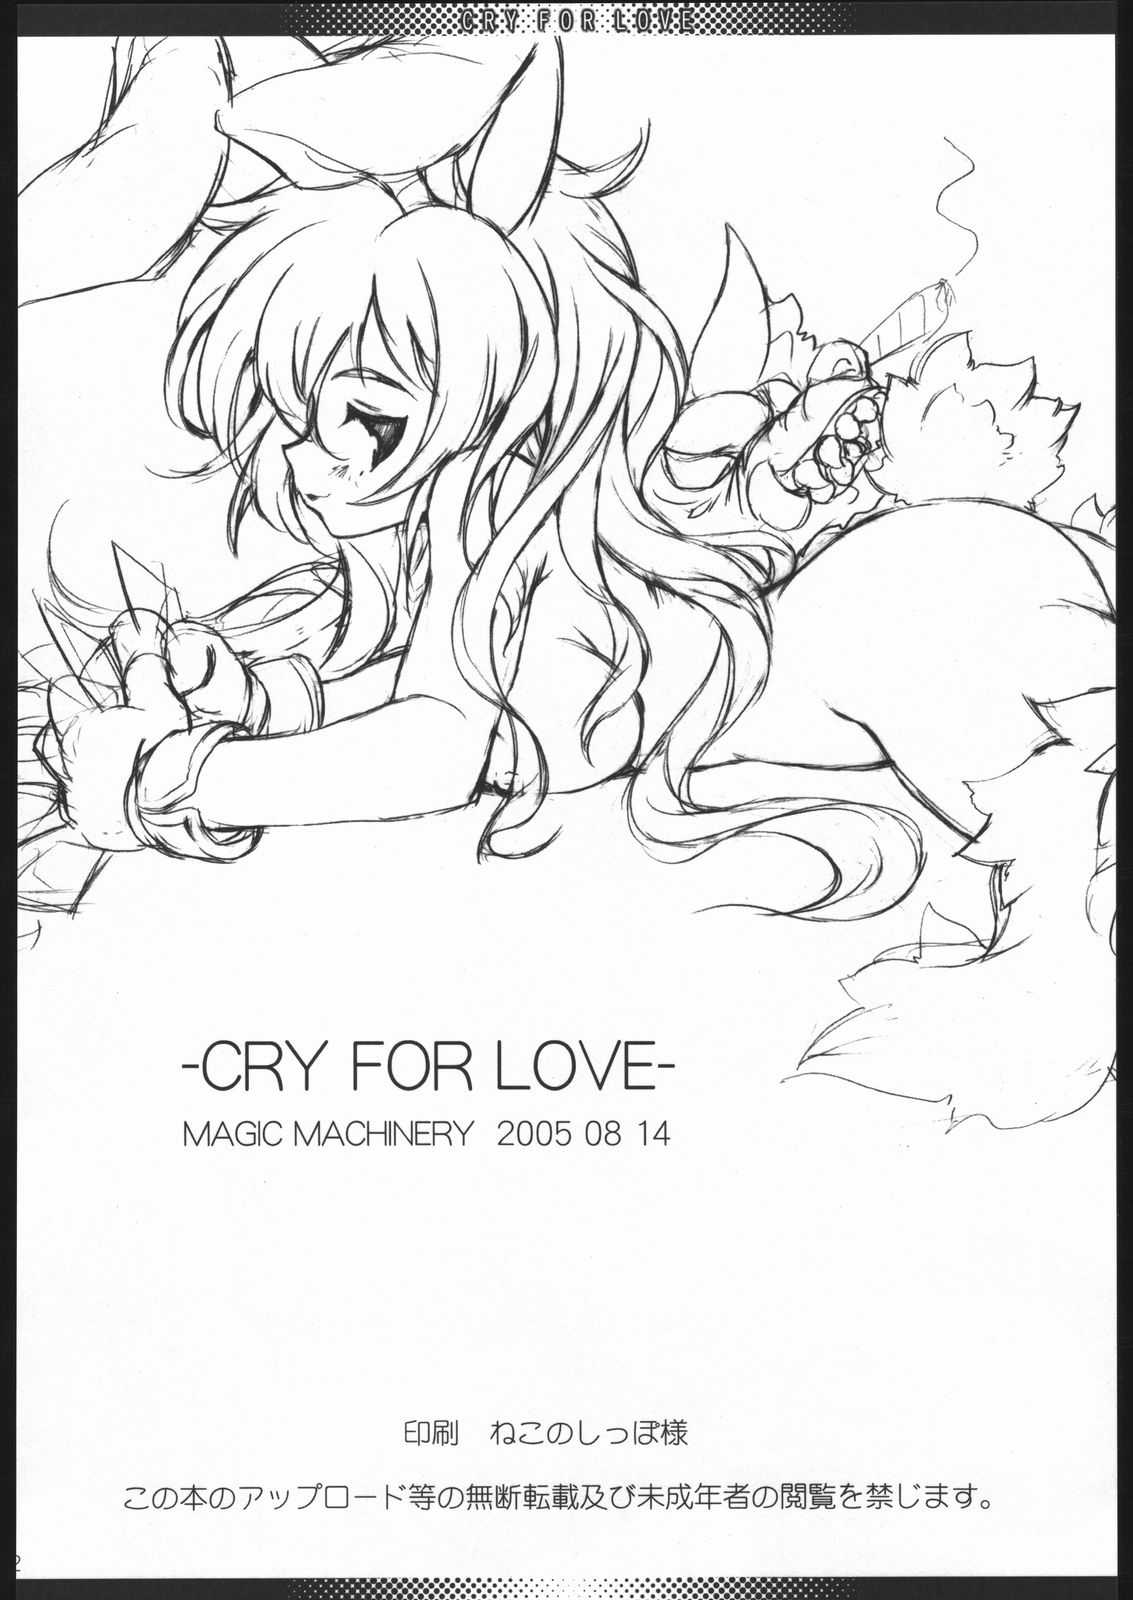 [Shinra Bansho] Cry For Love (Magic Machinery) 